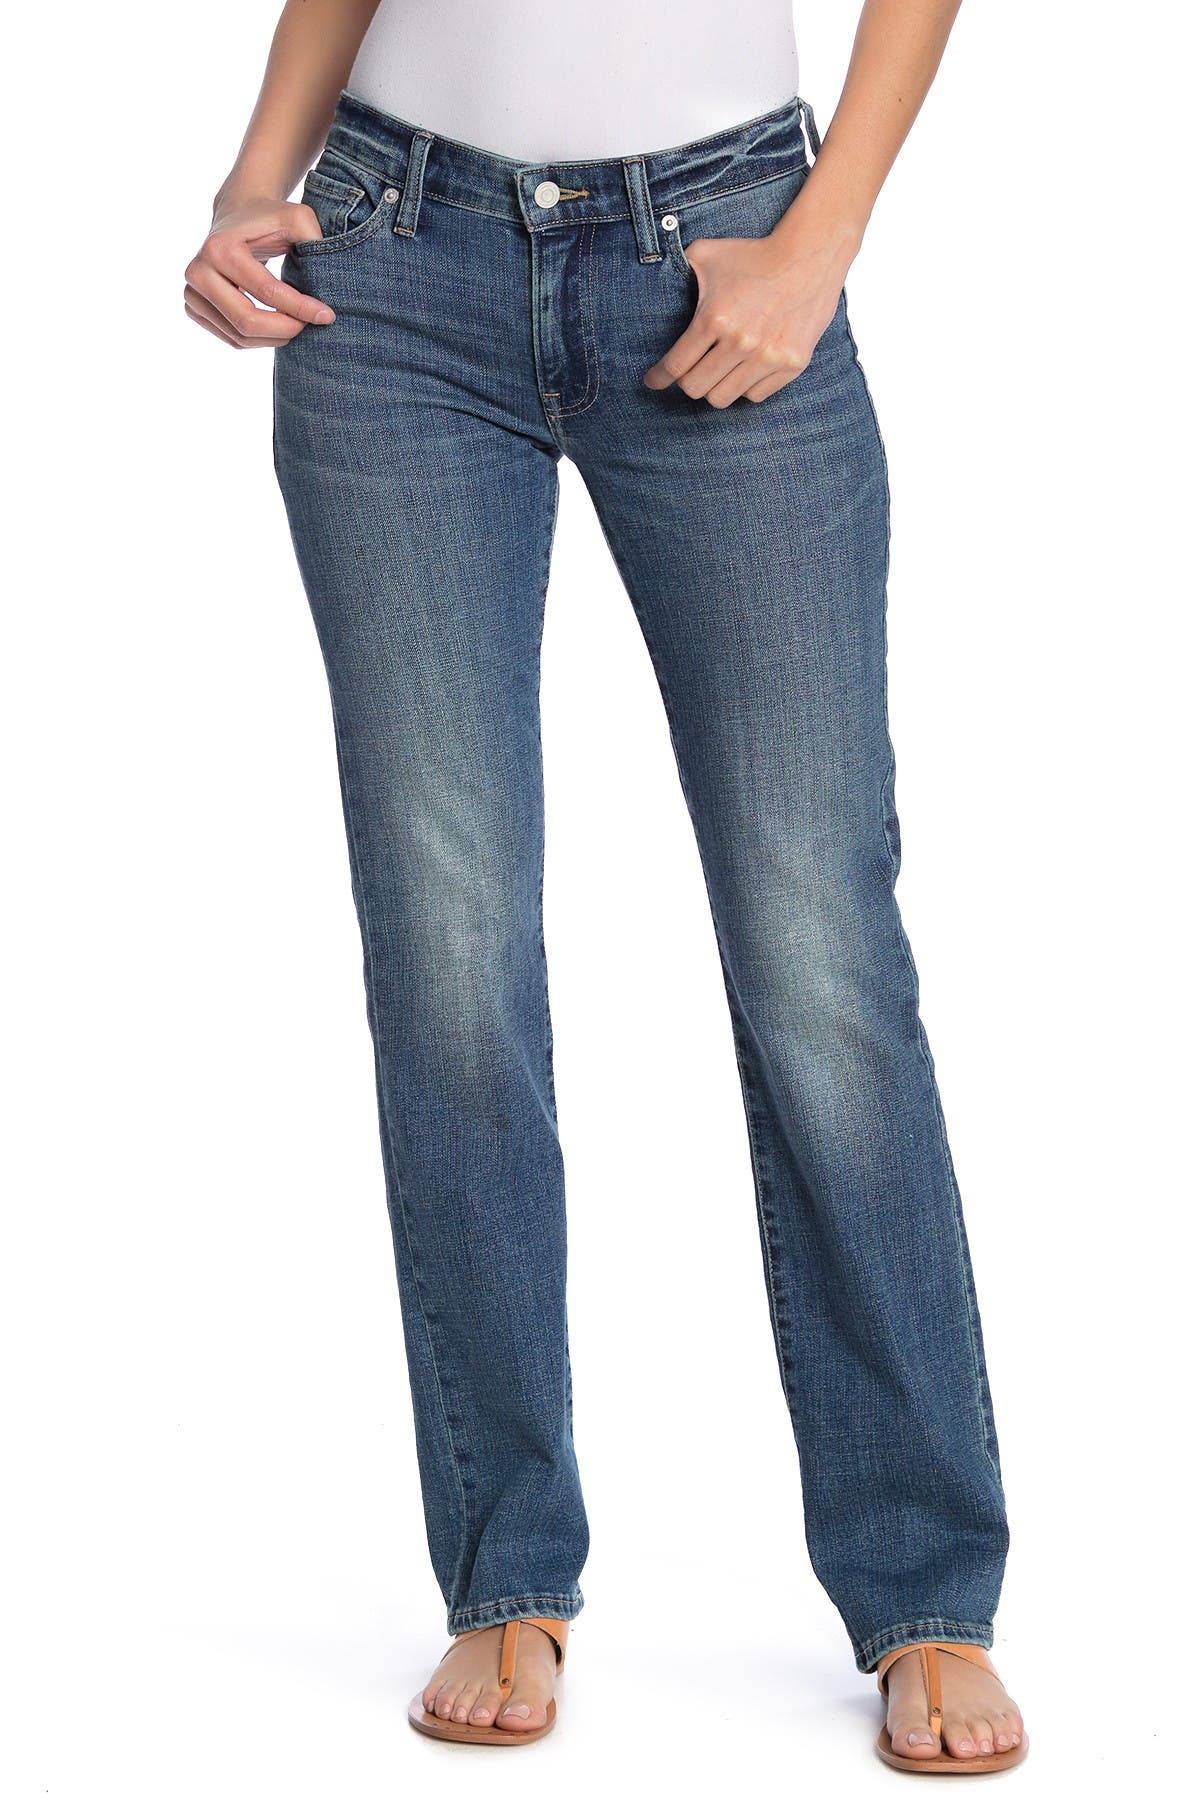 nordstrom rack lucky jeans